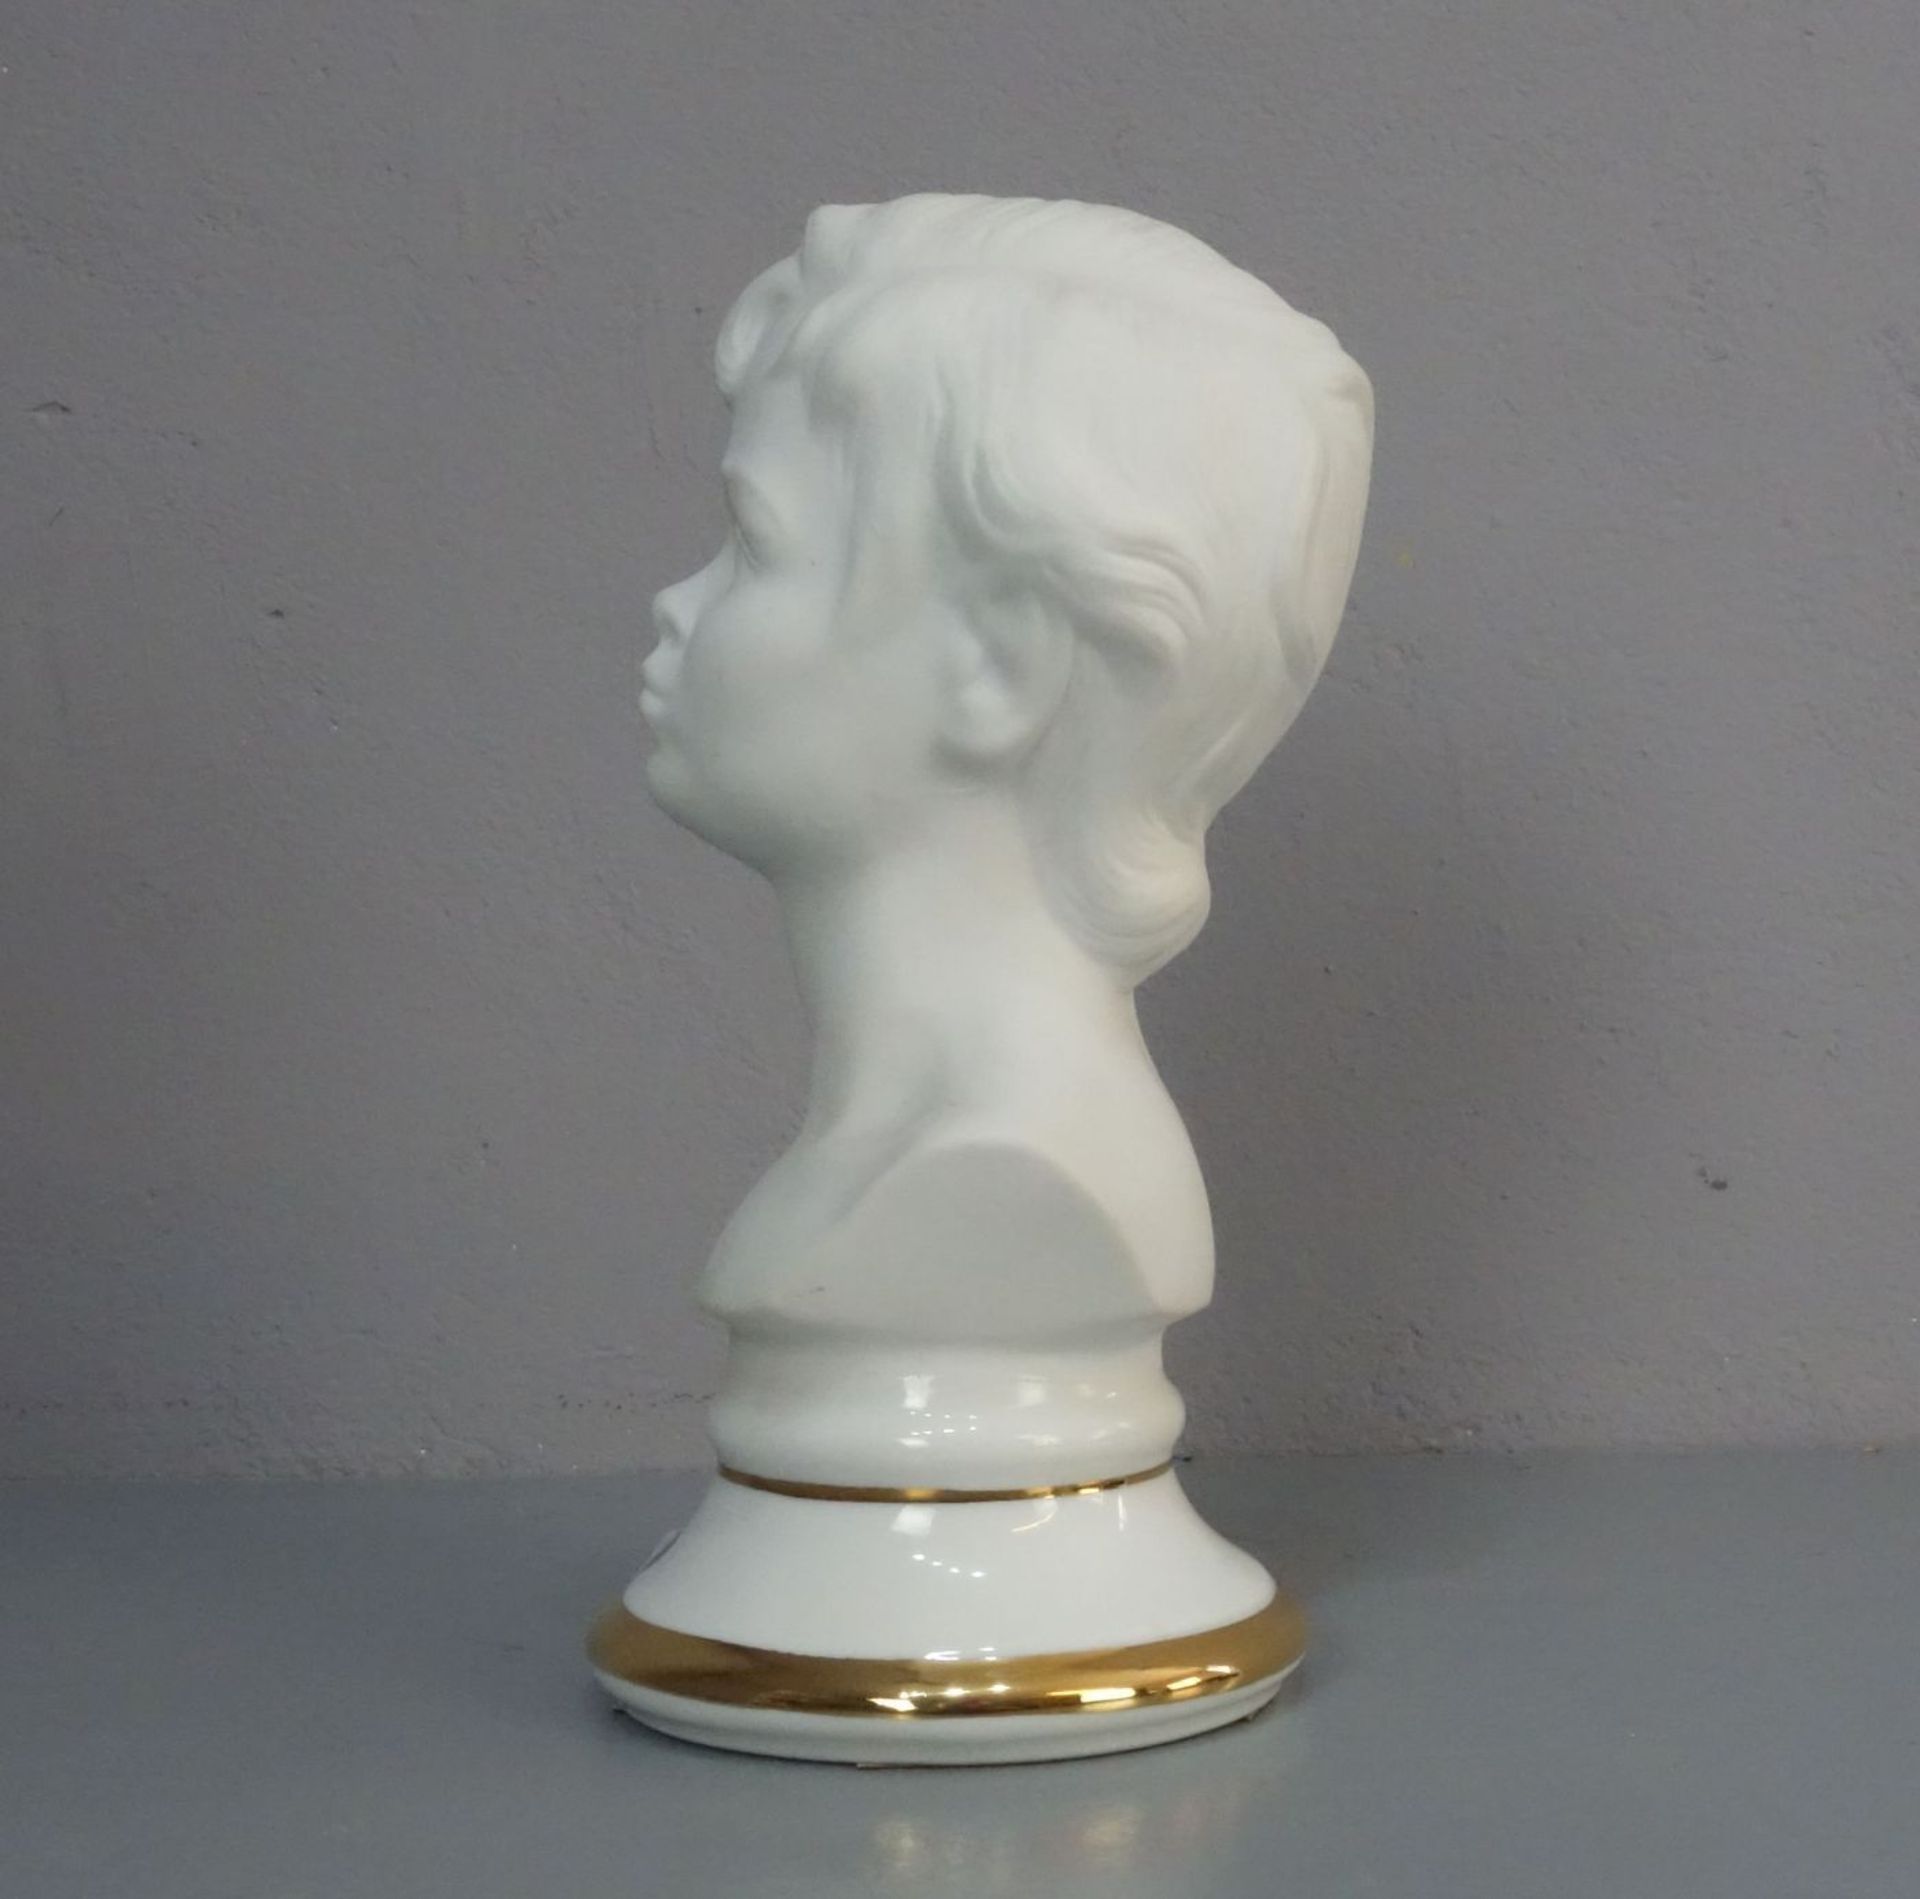 PORZELLANFIGUR / porcelain figure: "Büste eines jungen Mannes", Biskuitporzellan, Manufaktur "SANBO - Image 4 of 5